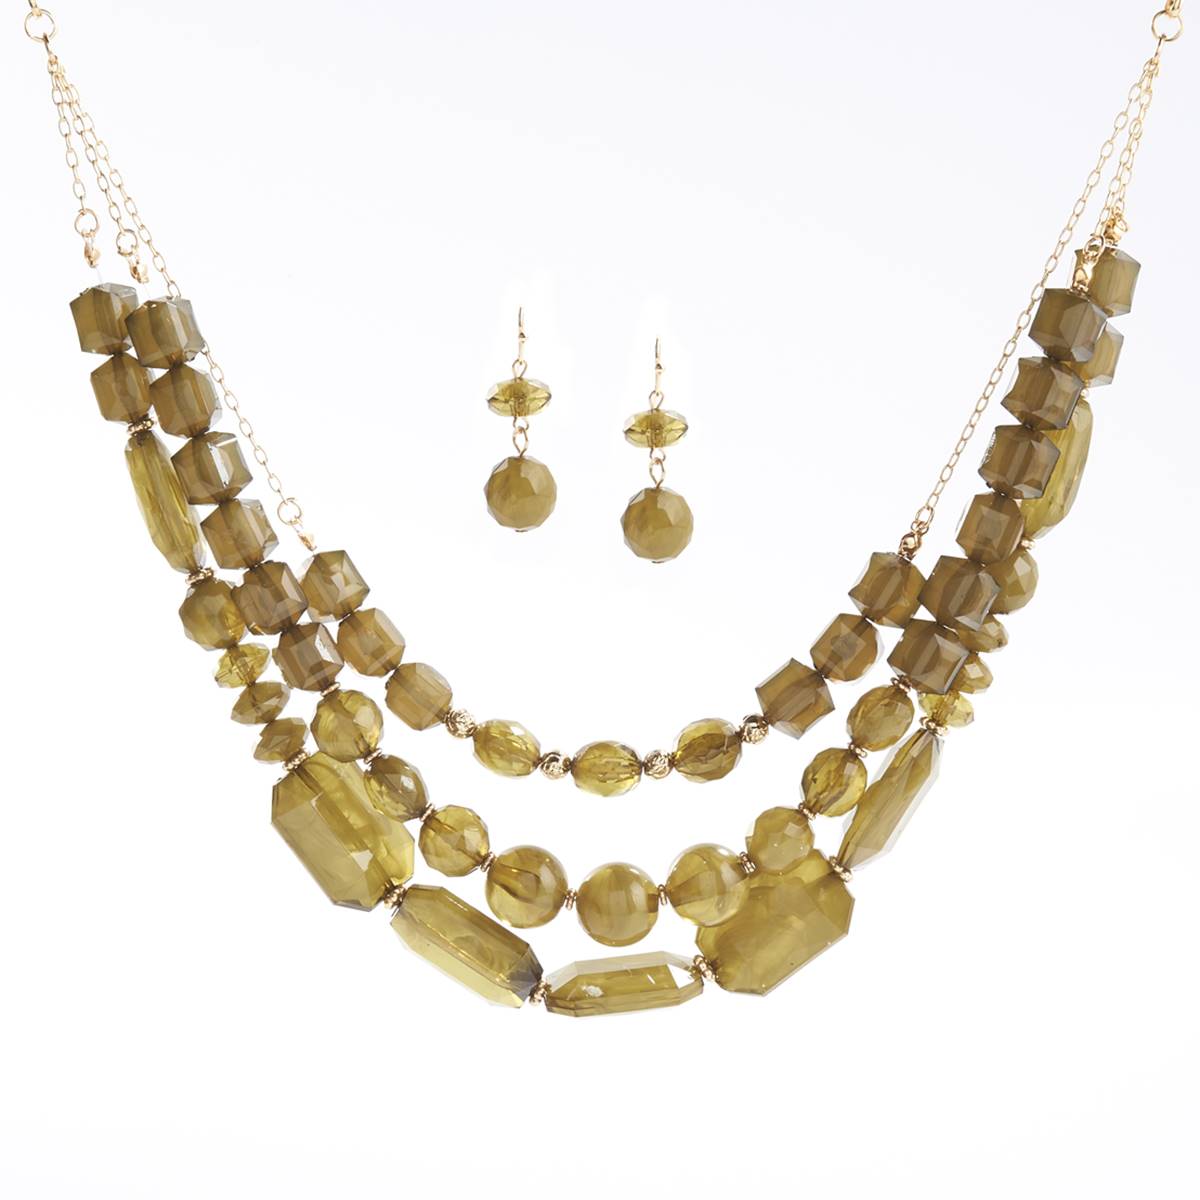 Ashley Cooper(tm) Beaded Flat Link Necklace & Earrings Set